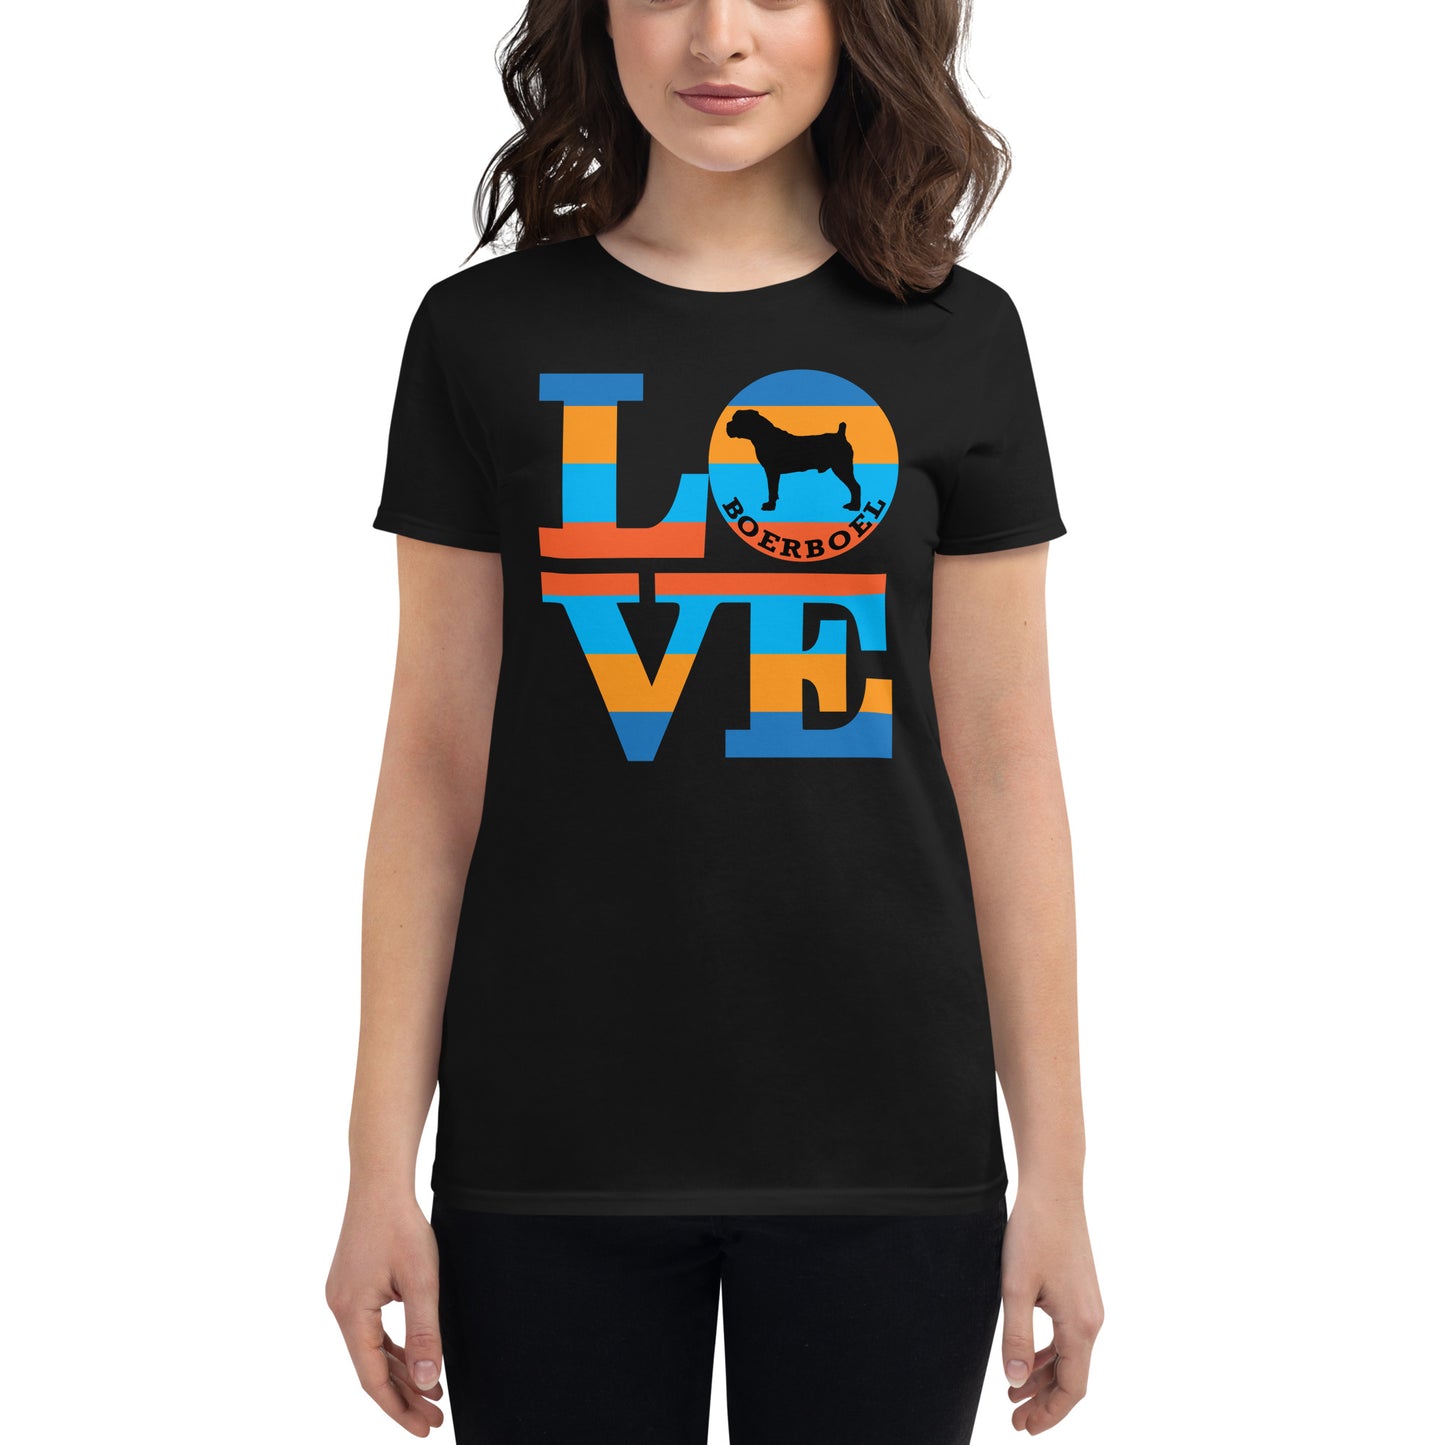 Love Boerboel Women's short sleeve t-shirt